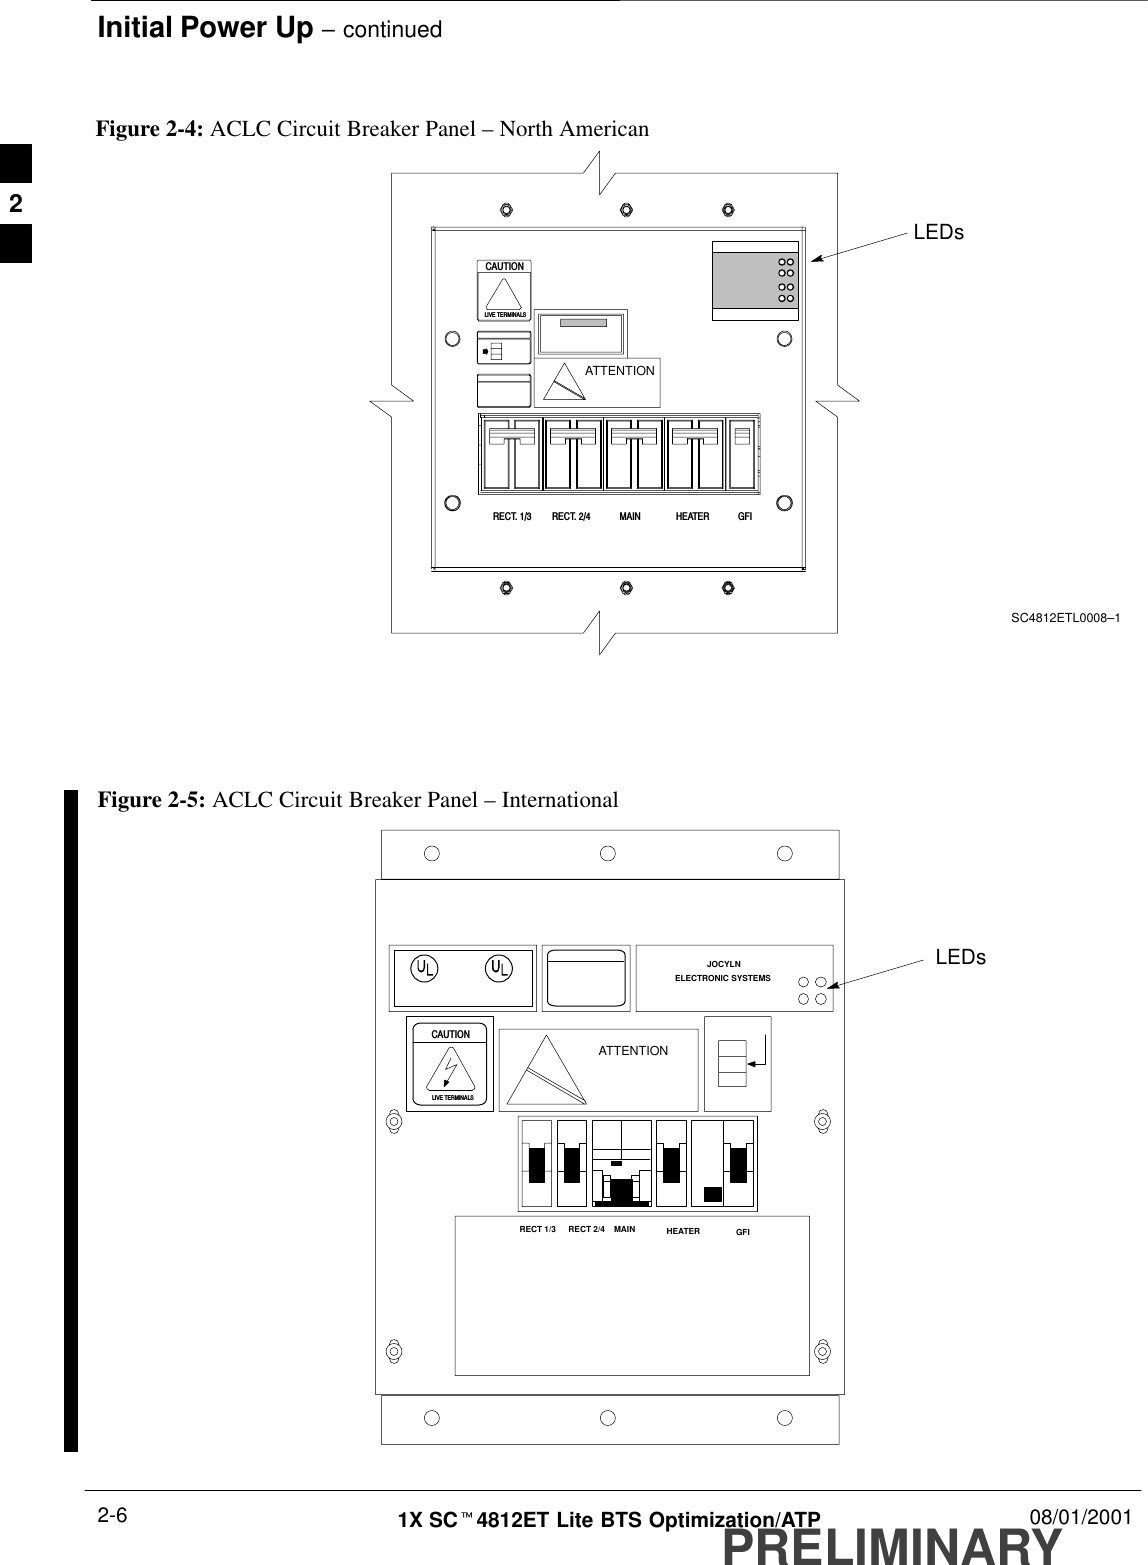 Initial Power Up – continuedPRELIMINARY1X SCt4812ET Lite BTS Optimization/ATP 08/01/20012-6Figure 2-4: ACLC Circuit Breaker Panel – North AmericanLEDsSC4812ETL0008–1ATTENTIONCAUTIONLIVE TERMINALSRECT. 1/3 RECT. 2/4 GFIHEATERMAINATTENTIONCAUTIONLIVE TERMINALSFigure 2-5: ACLC Circuit Breaker Panel – InternationalLEDsRECT 1/3 RECT 2/4 MAIN HEATER GFIJOCYLNELECTRONIC SYSTEMS2